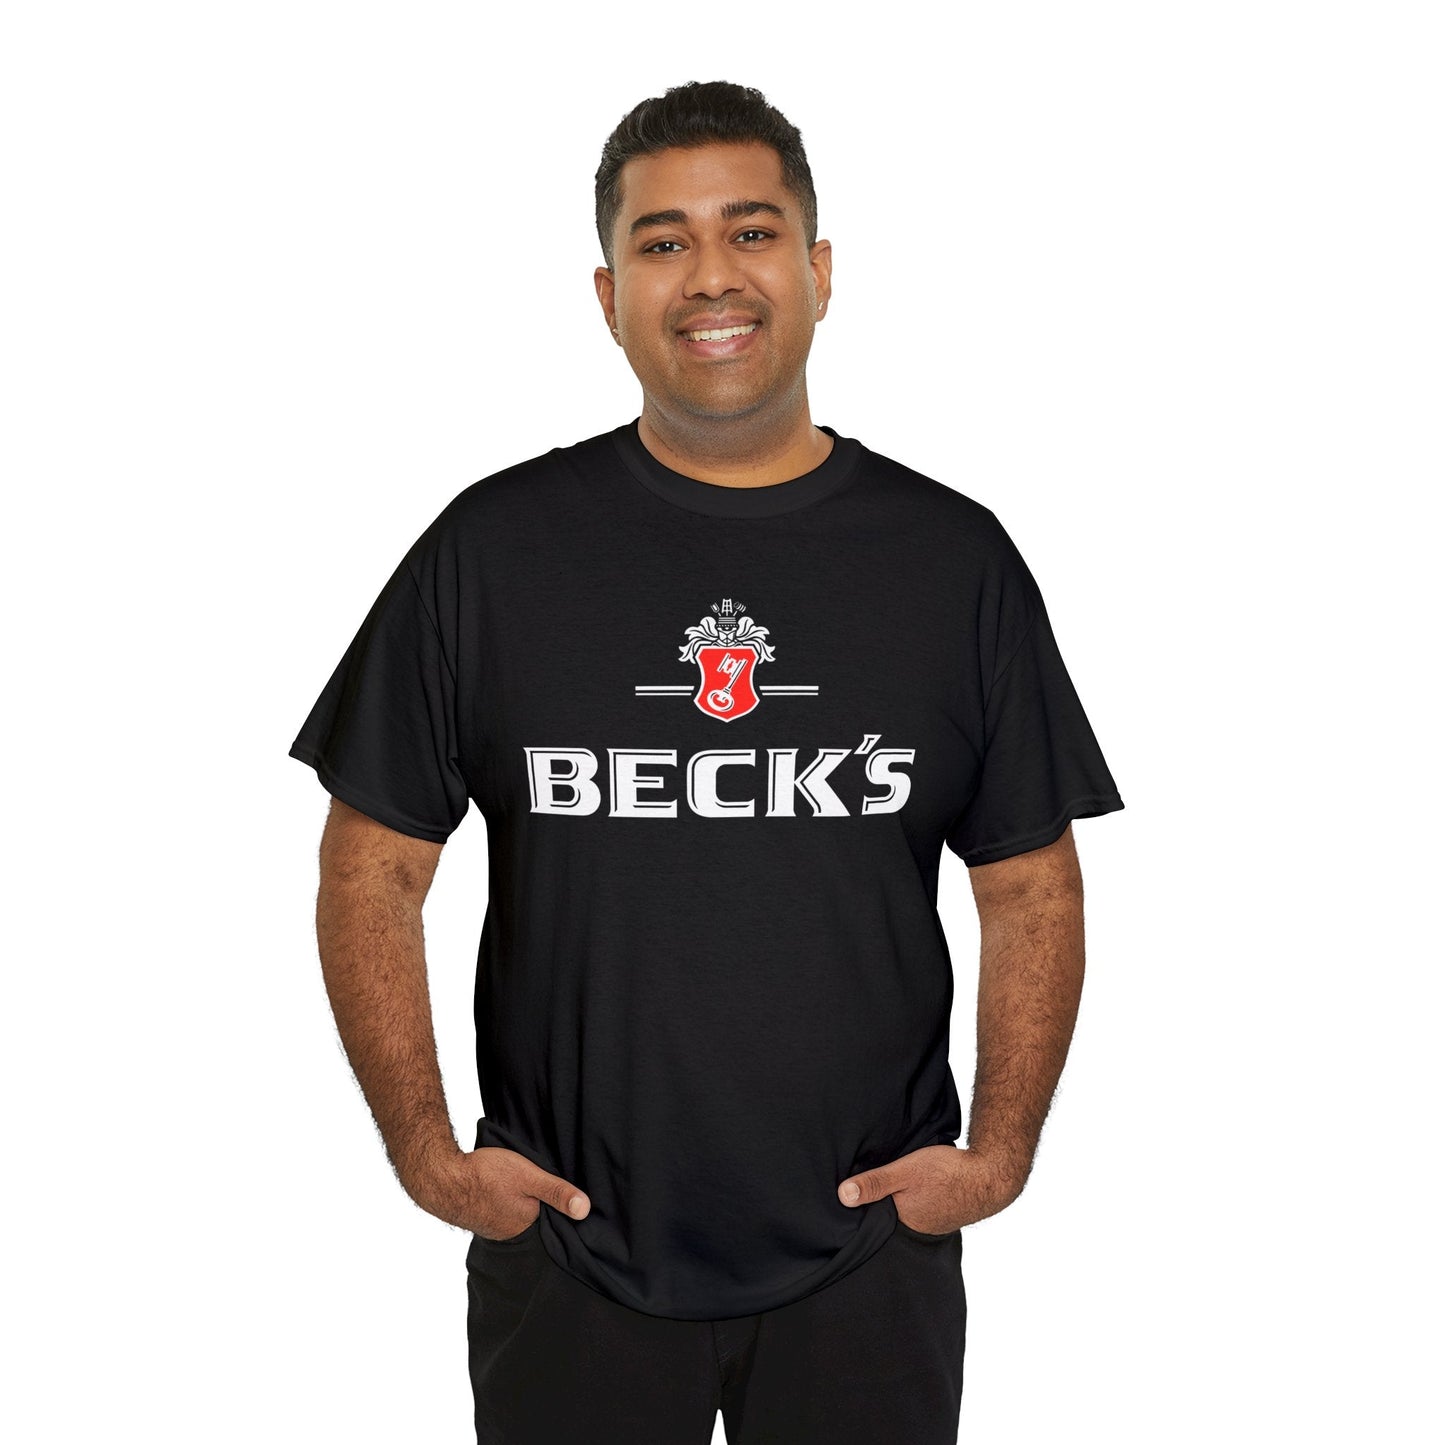 Beck's Beer Logo T-Shirt - RetroTeeShop